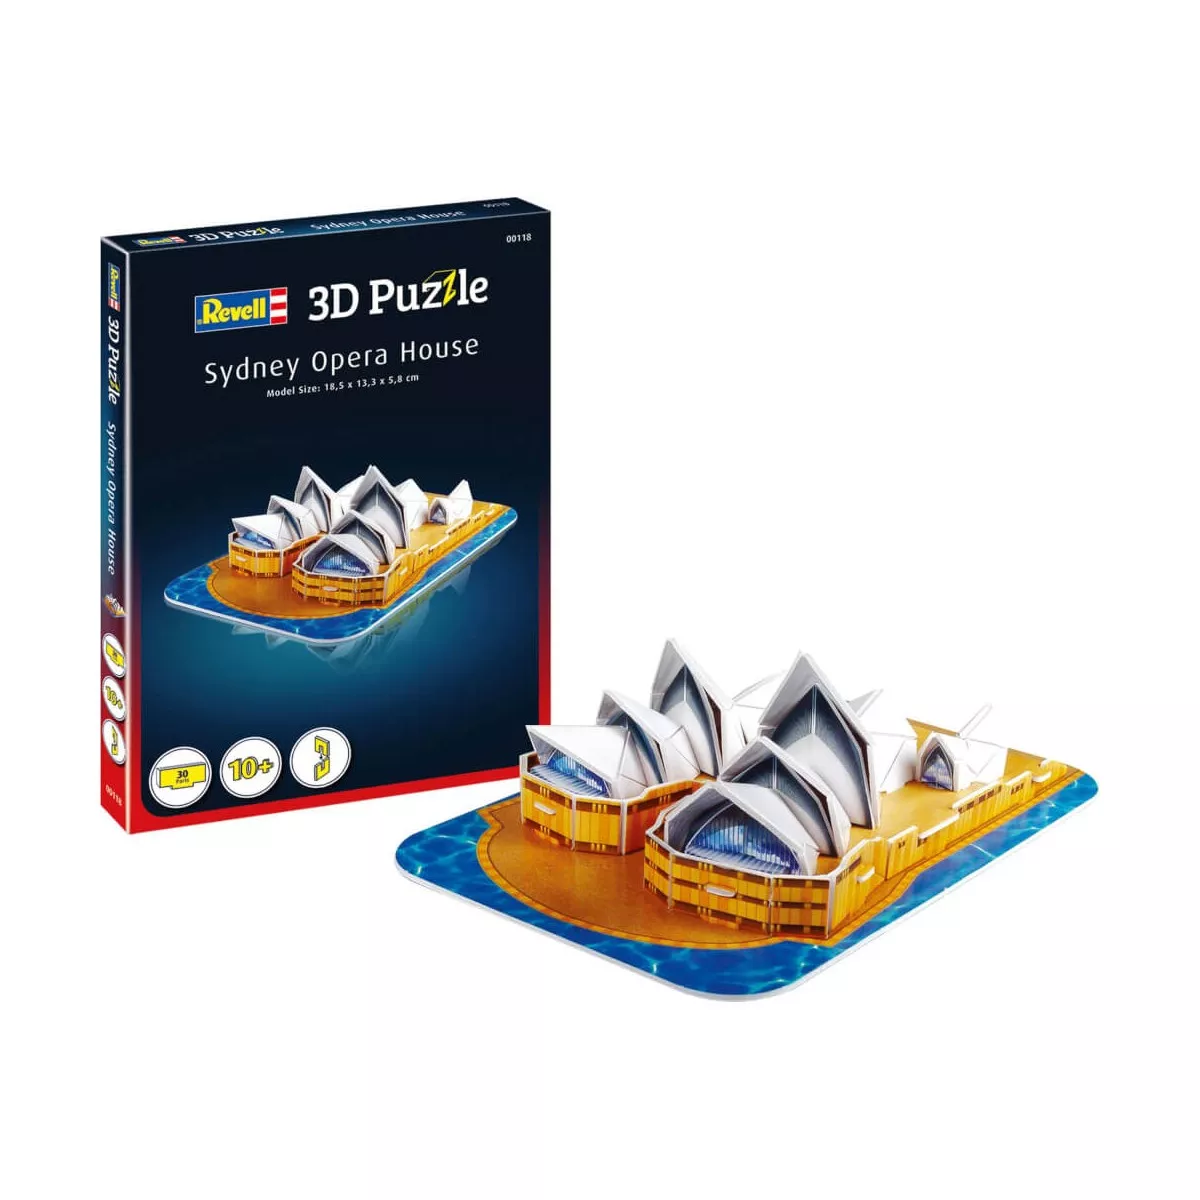 Revell 00118 3D Puzzle Oper Sydney